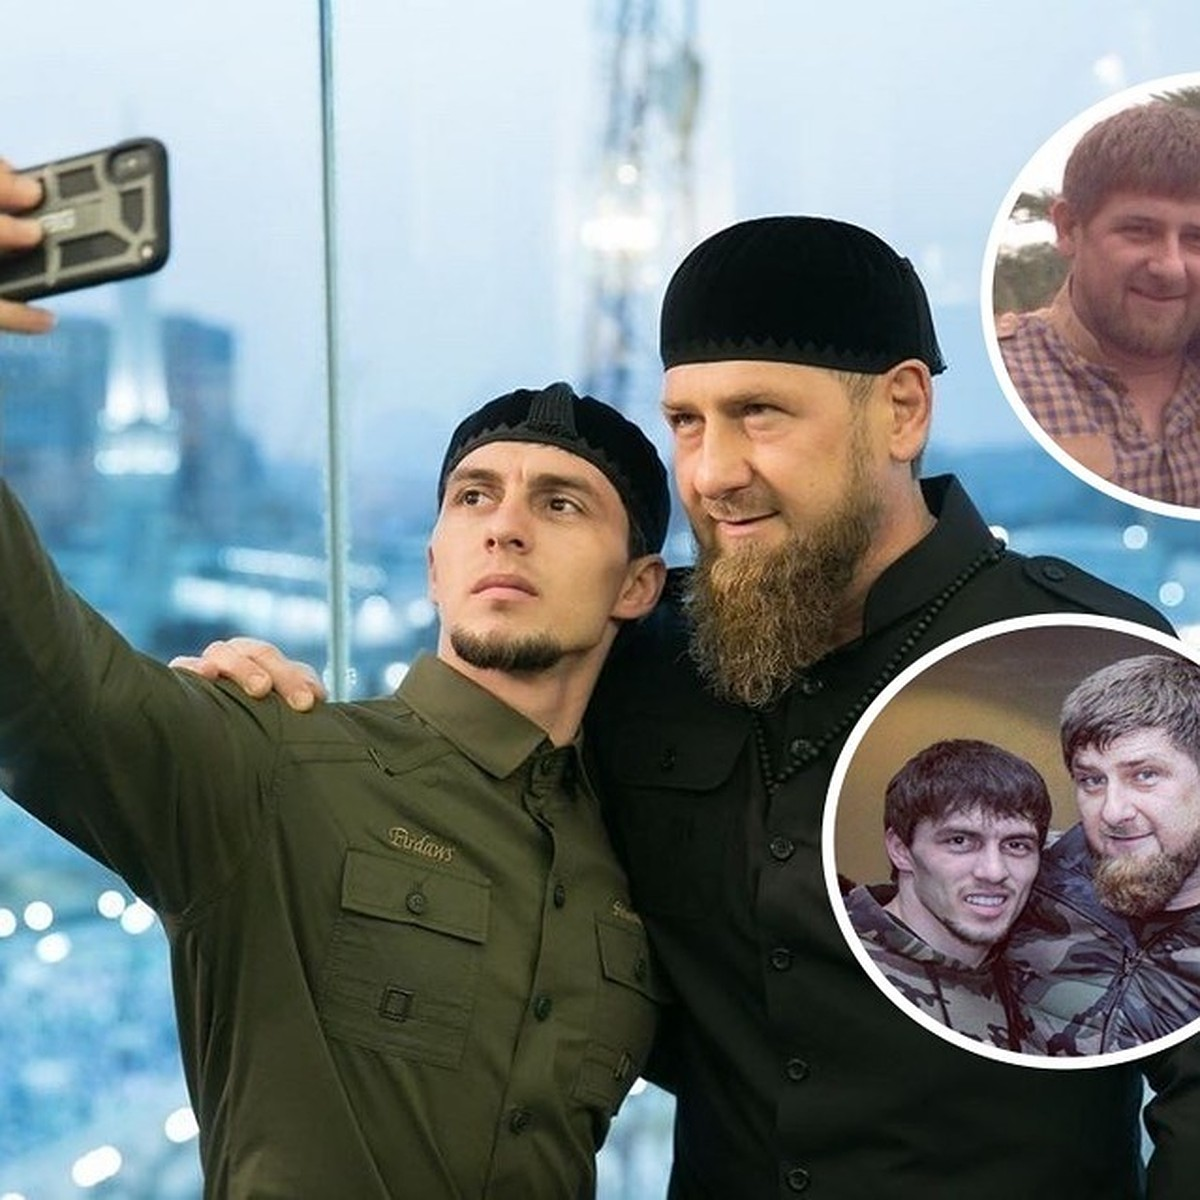 Сколько лет чеченцам